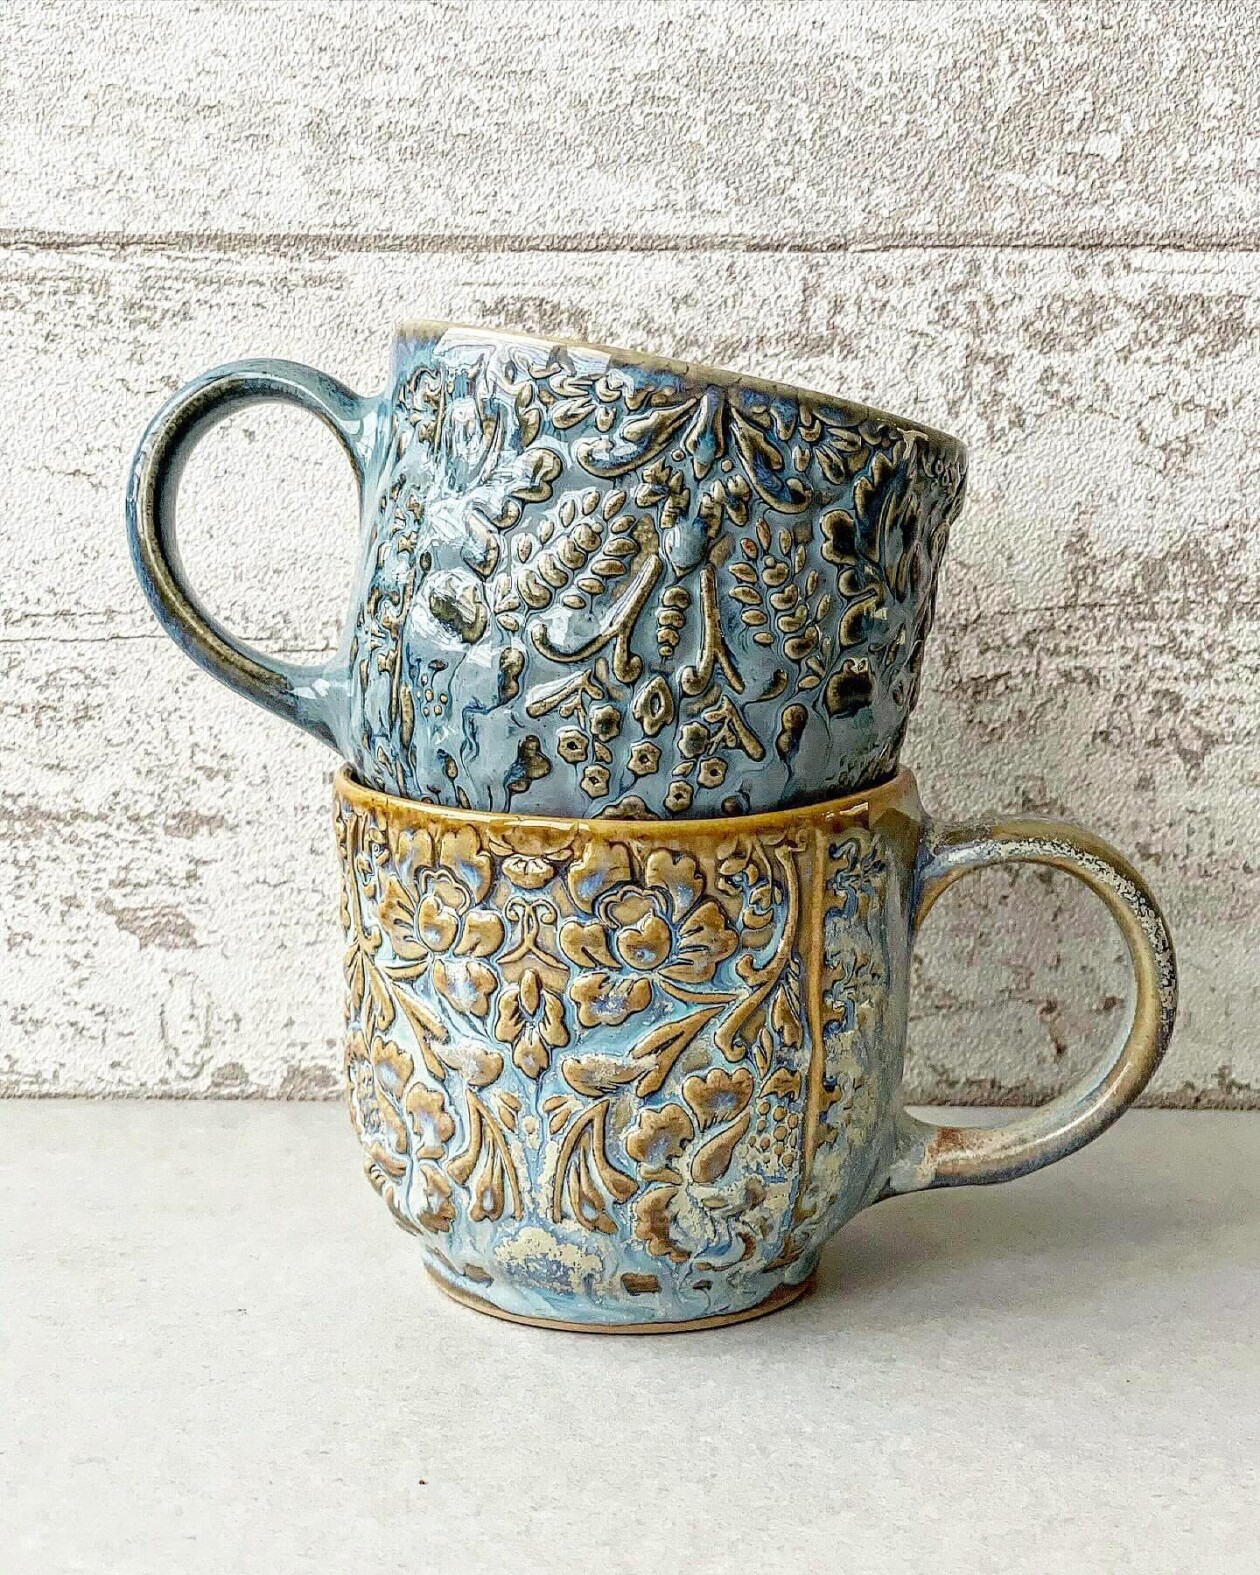 Ceramics With Vintage Motifs By Joanna Dylowska (19)